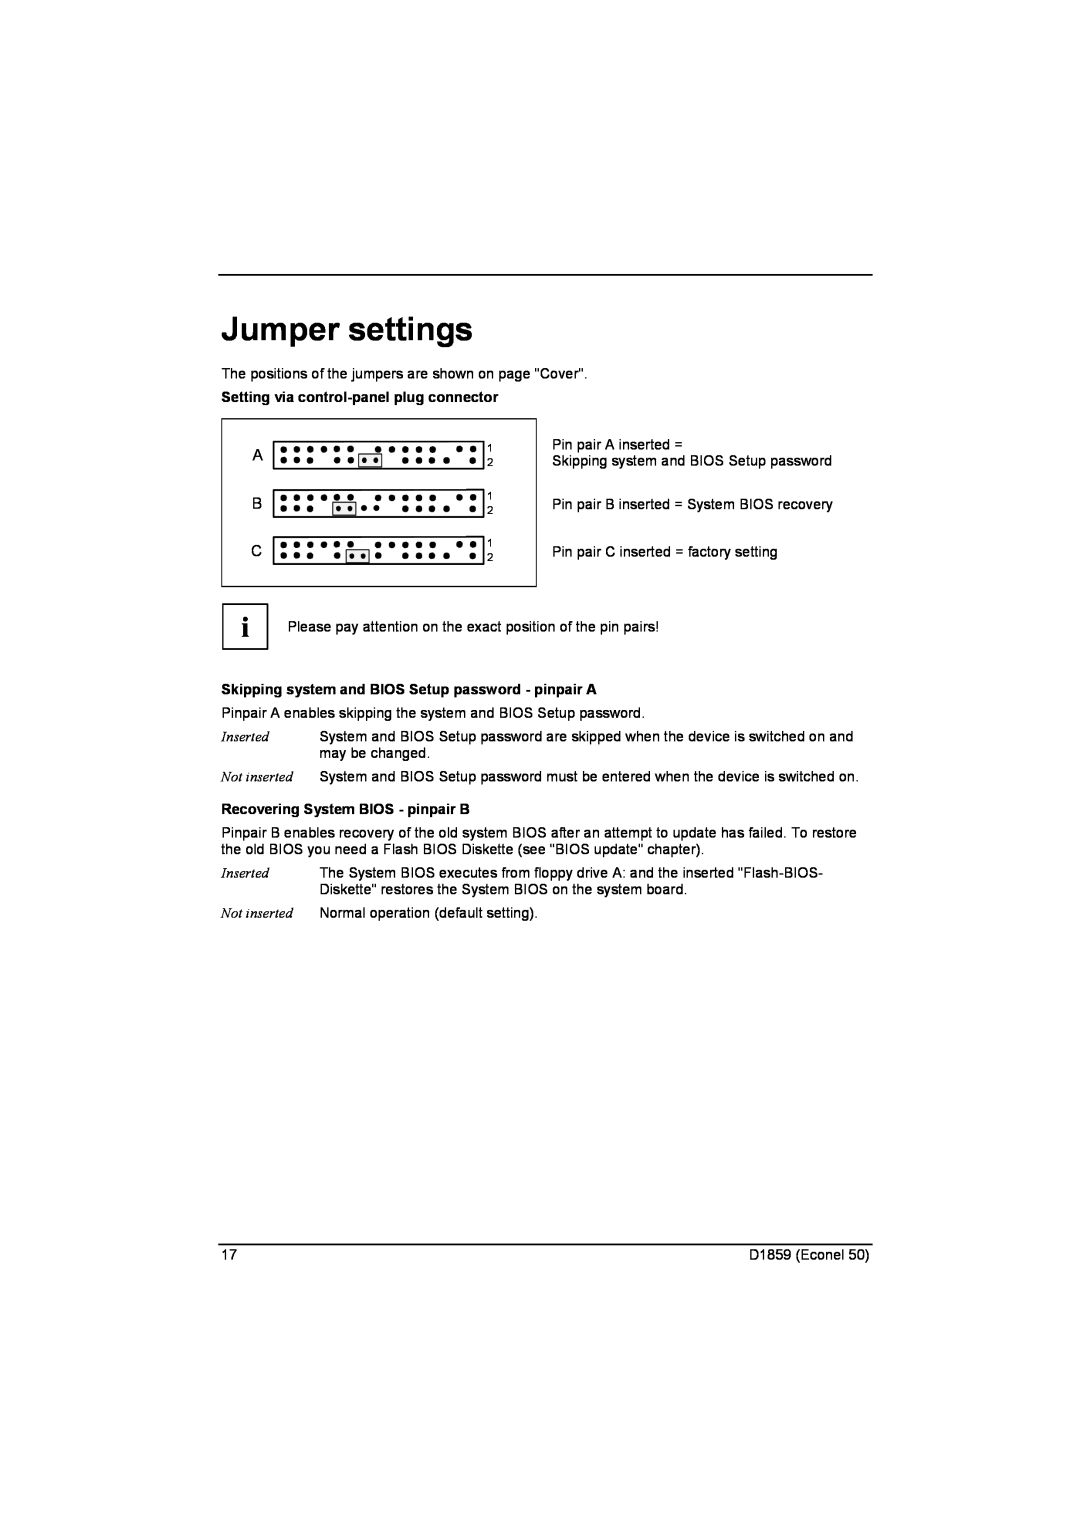 Fujitsu D1859 Jumper settings, Setting via control-panel plug connector, Recovering System BIOS - pinpair B 